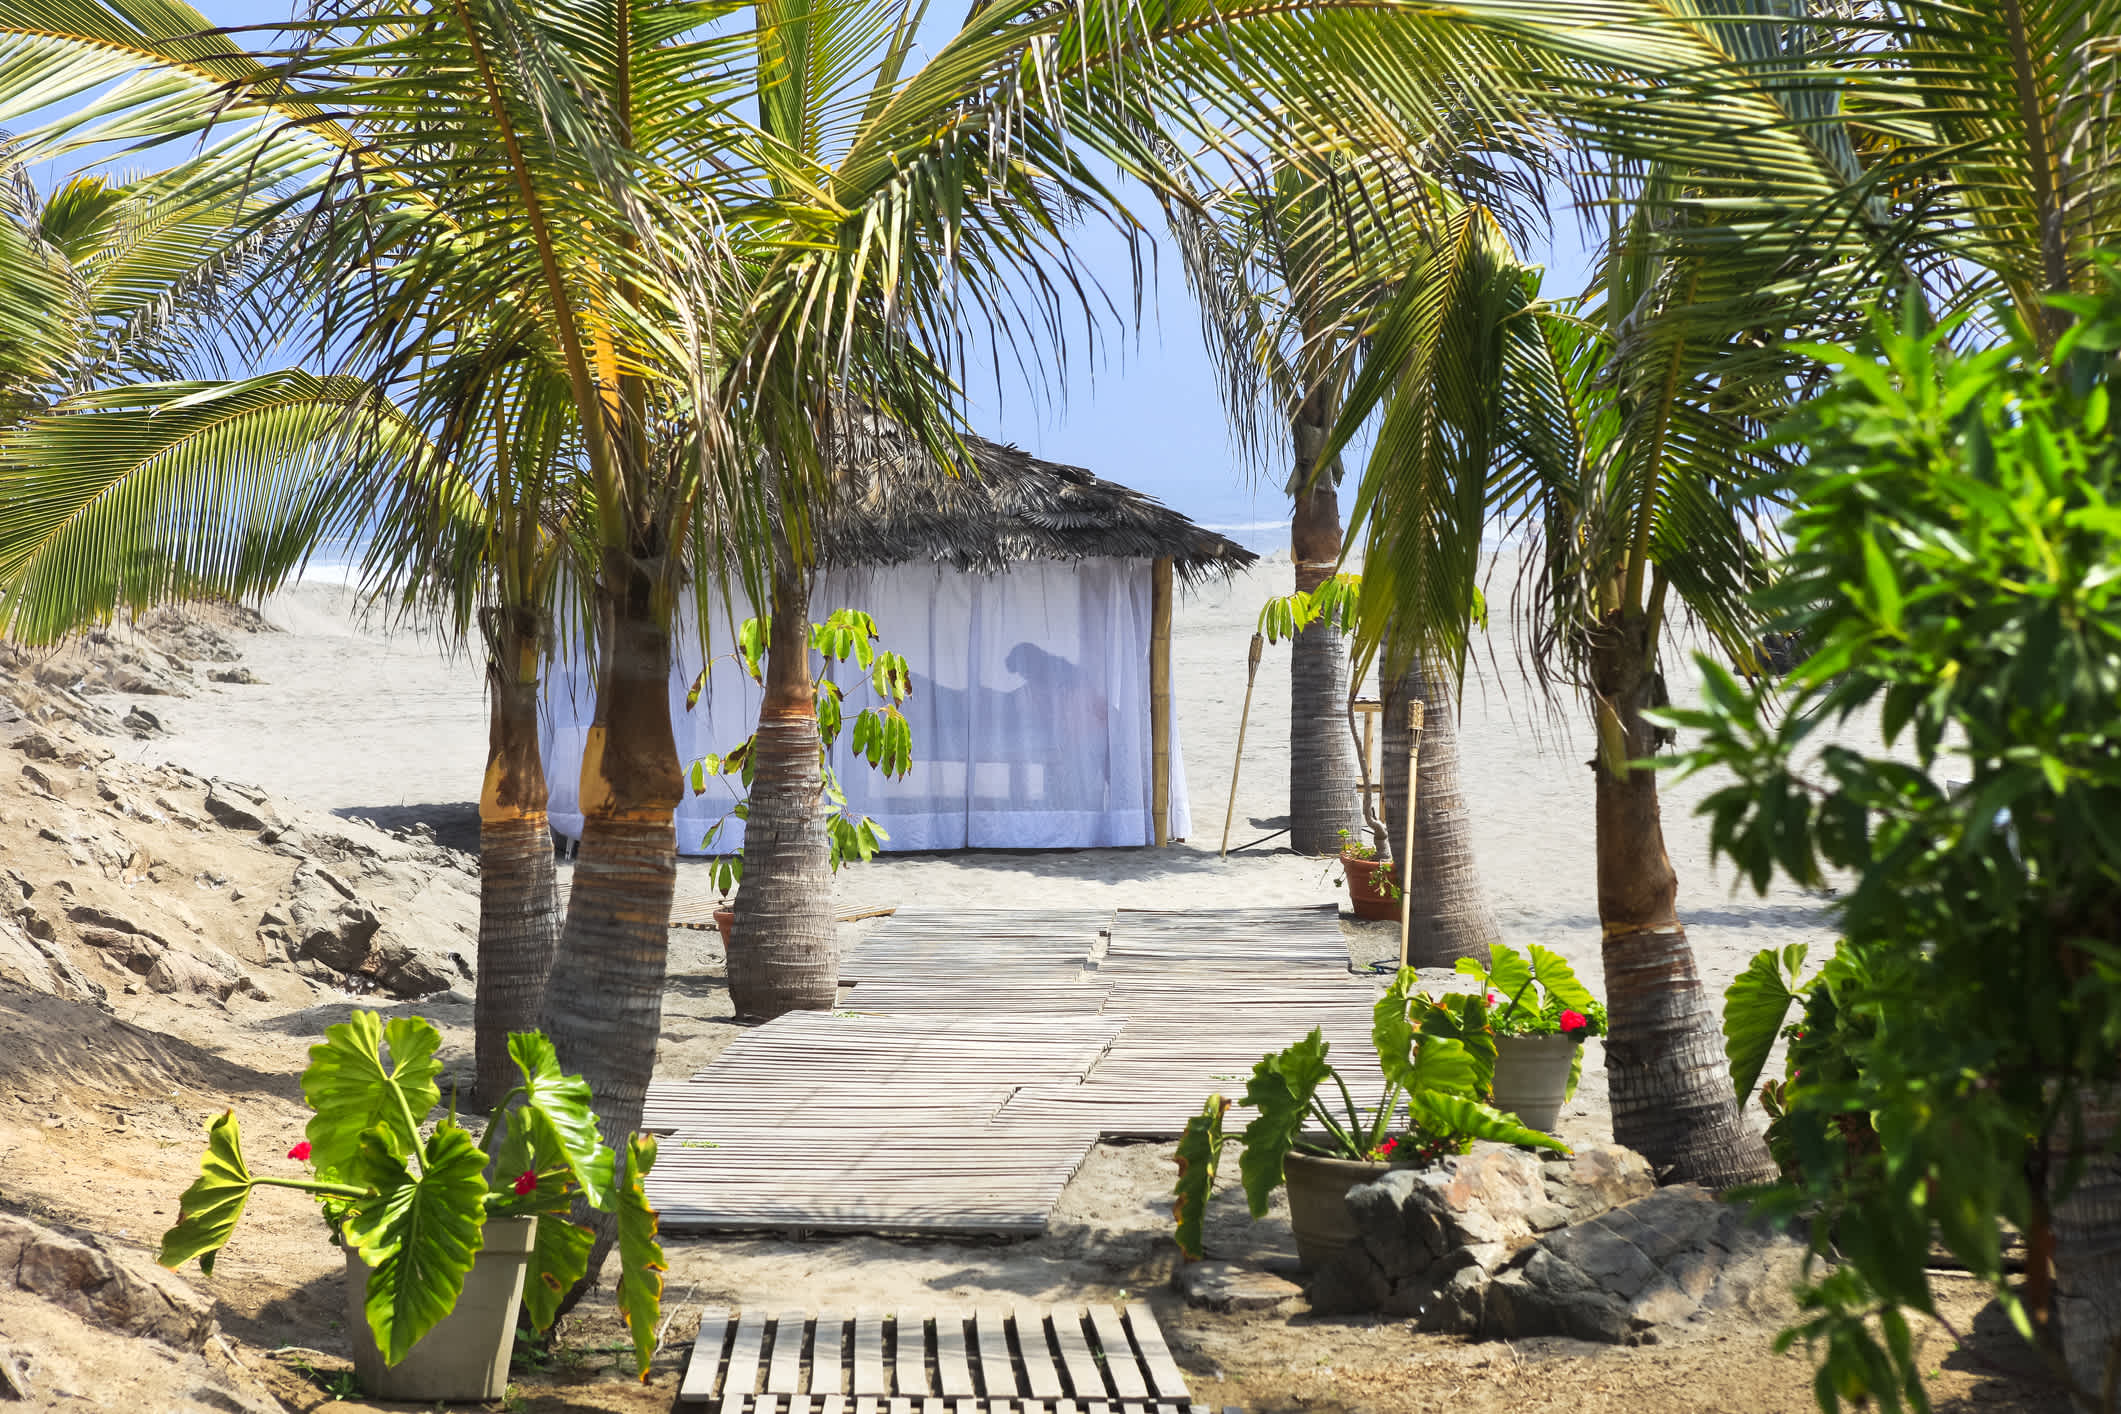 Massage-Hütte am Strand in Peru